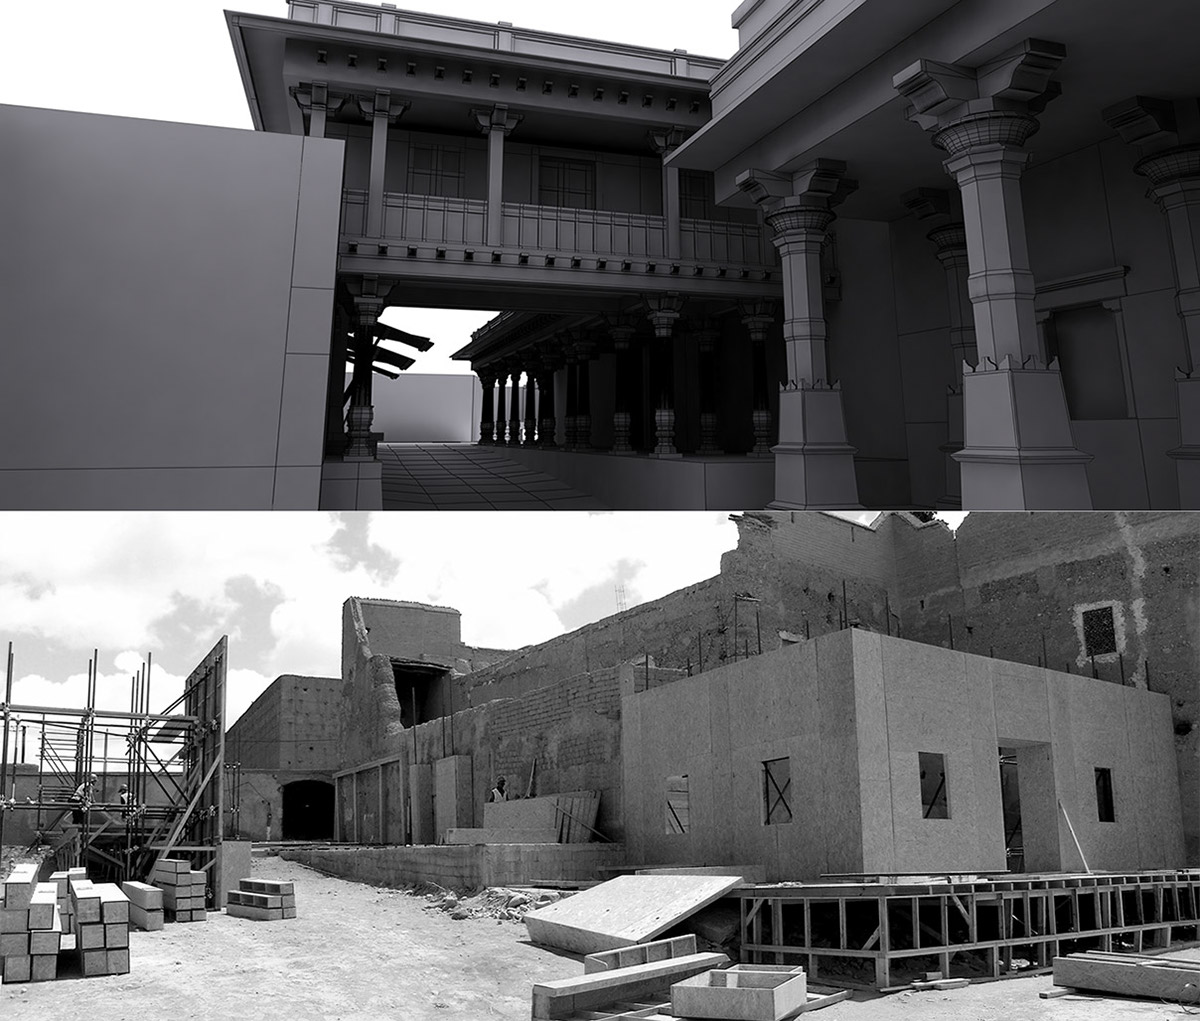 prince of persia jordan mechner video game bruckheimer digital set design digital sets vfx CG CGI palace temples Cities alamut fantasy Morocco